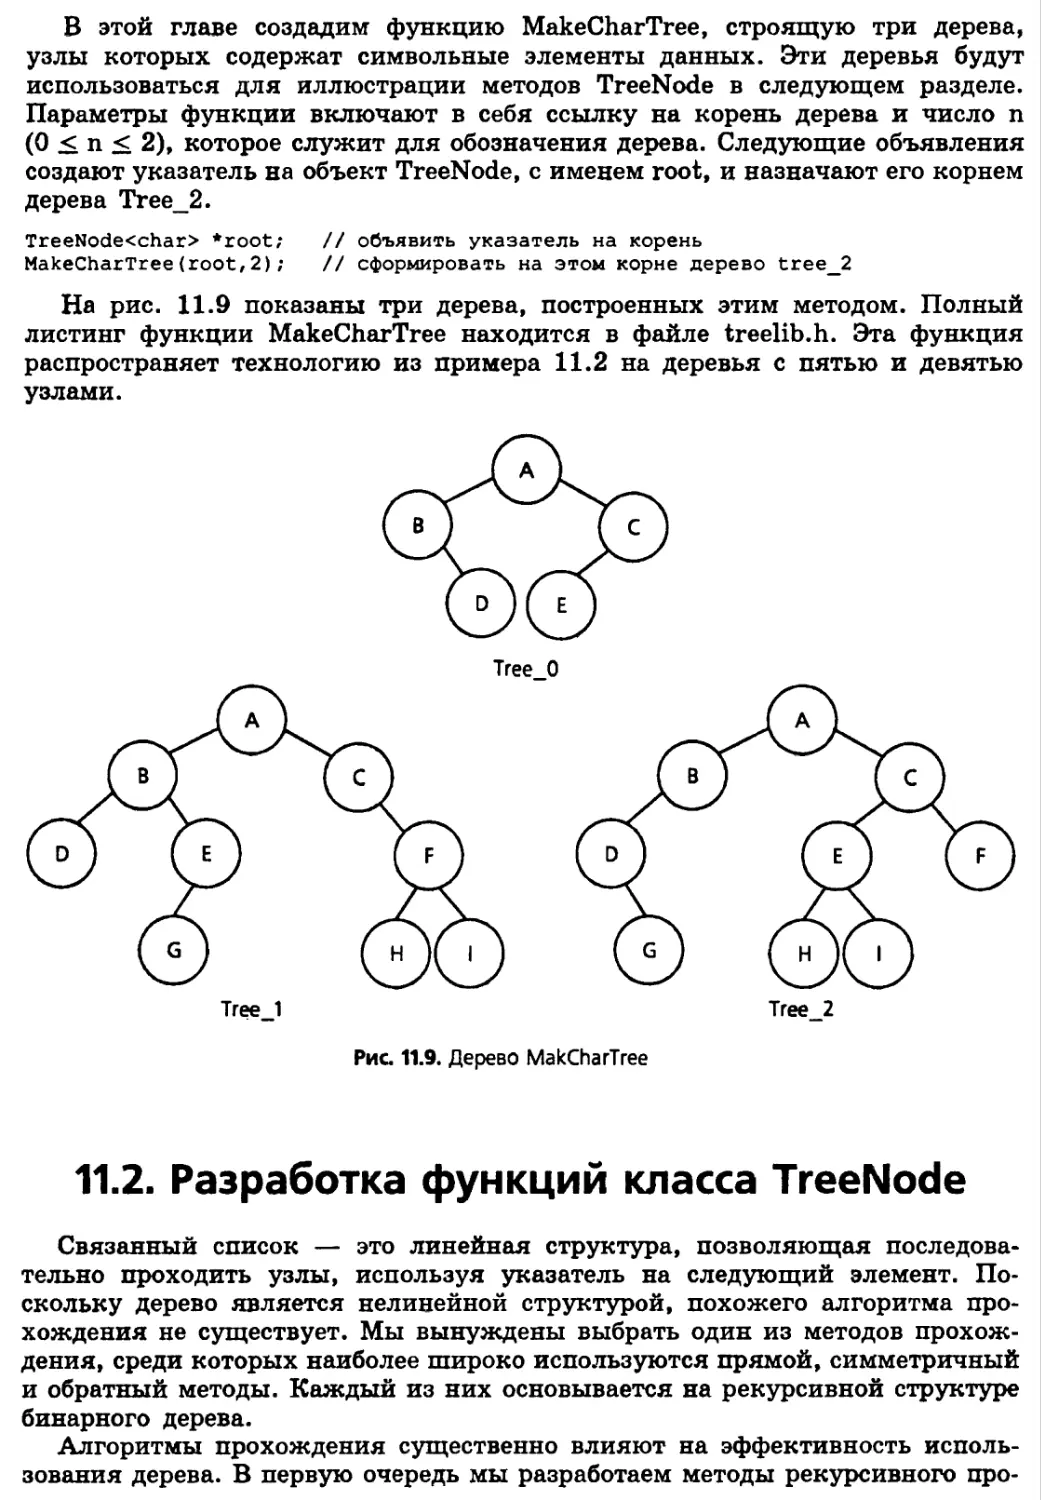 11.2. Разработка функций класса TreeNode